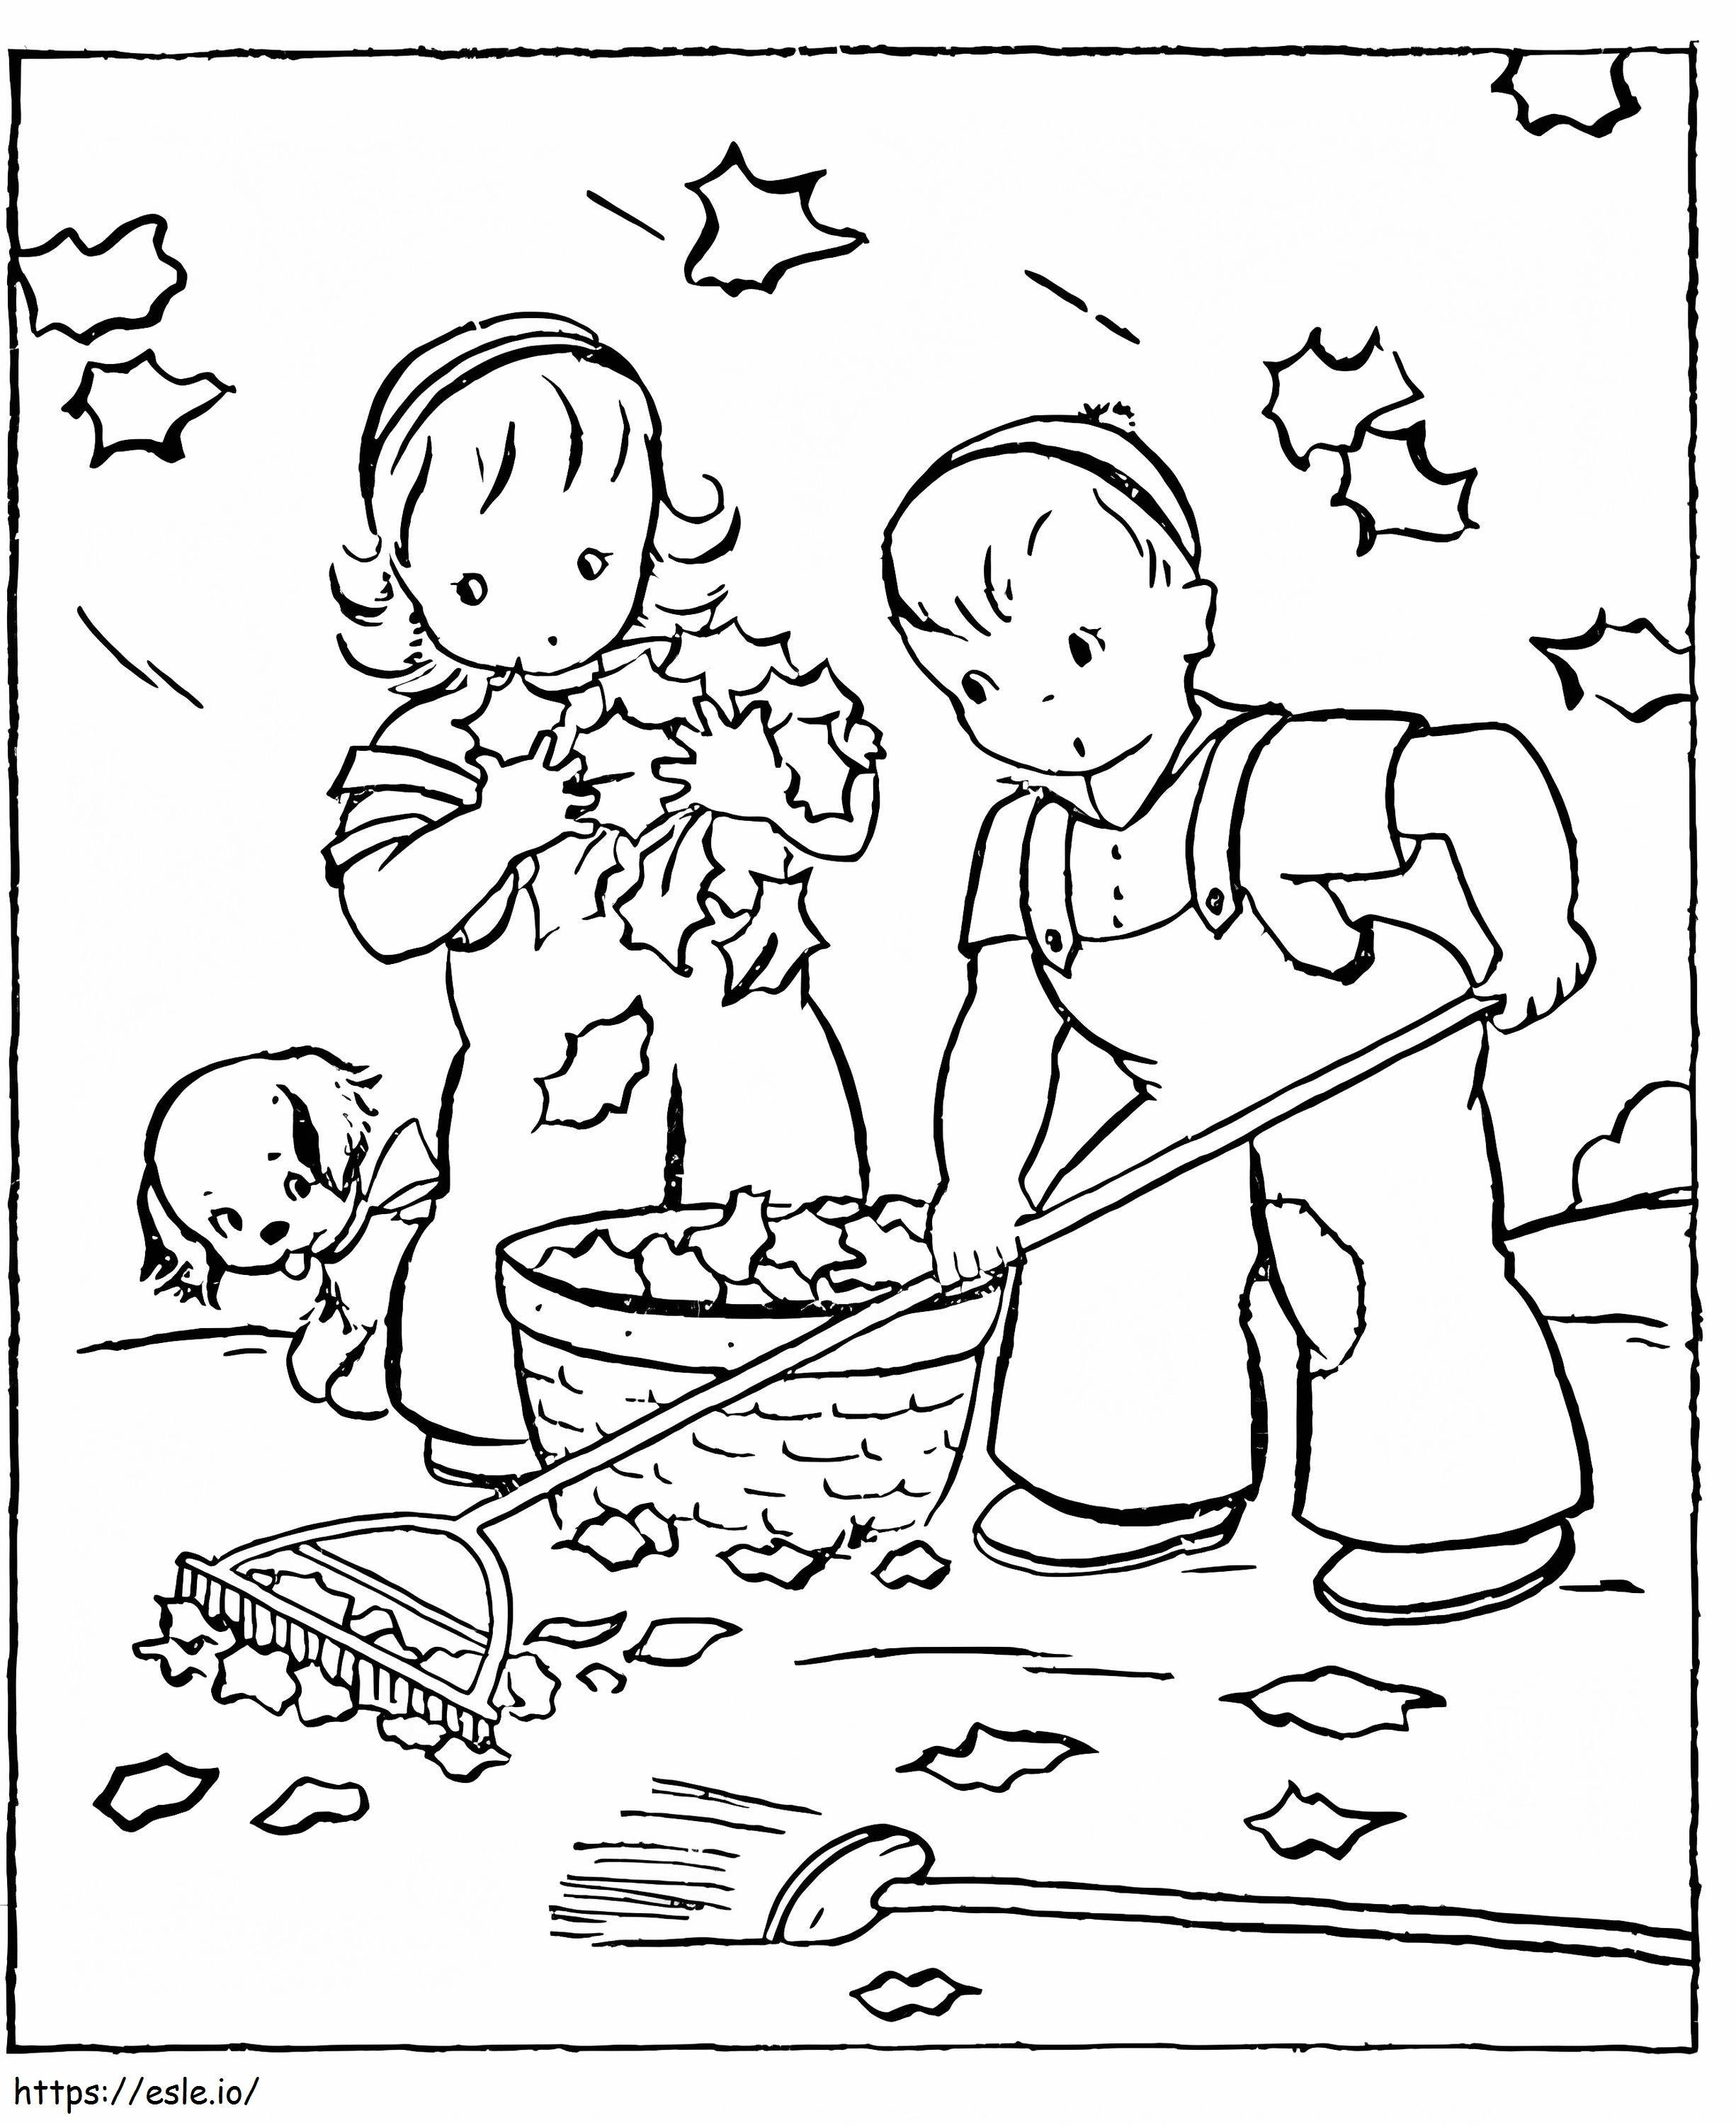 Coloriage Enfants rassemblant les feuilles qui tombent à imprimer dessin